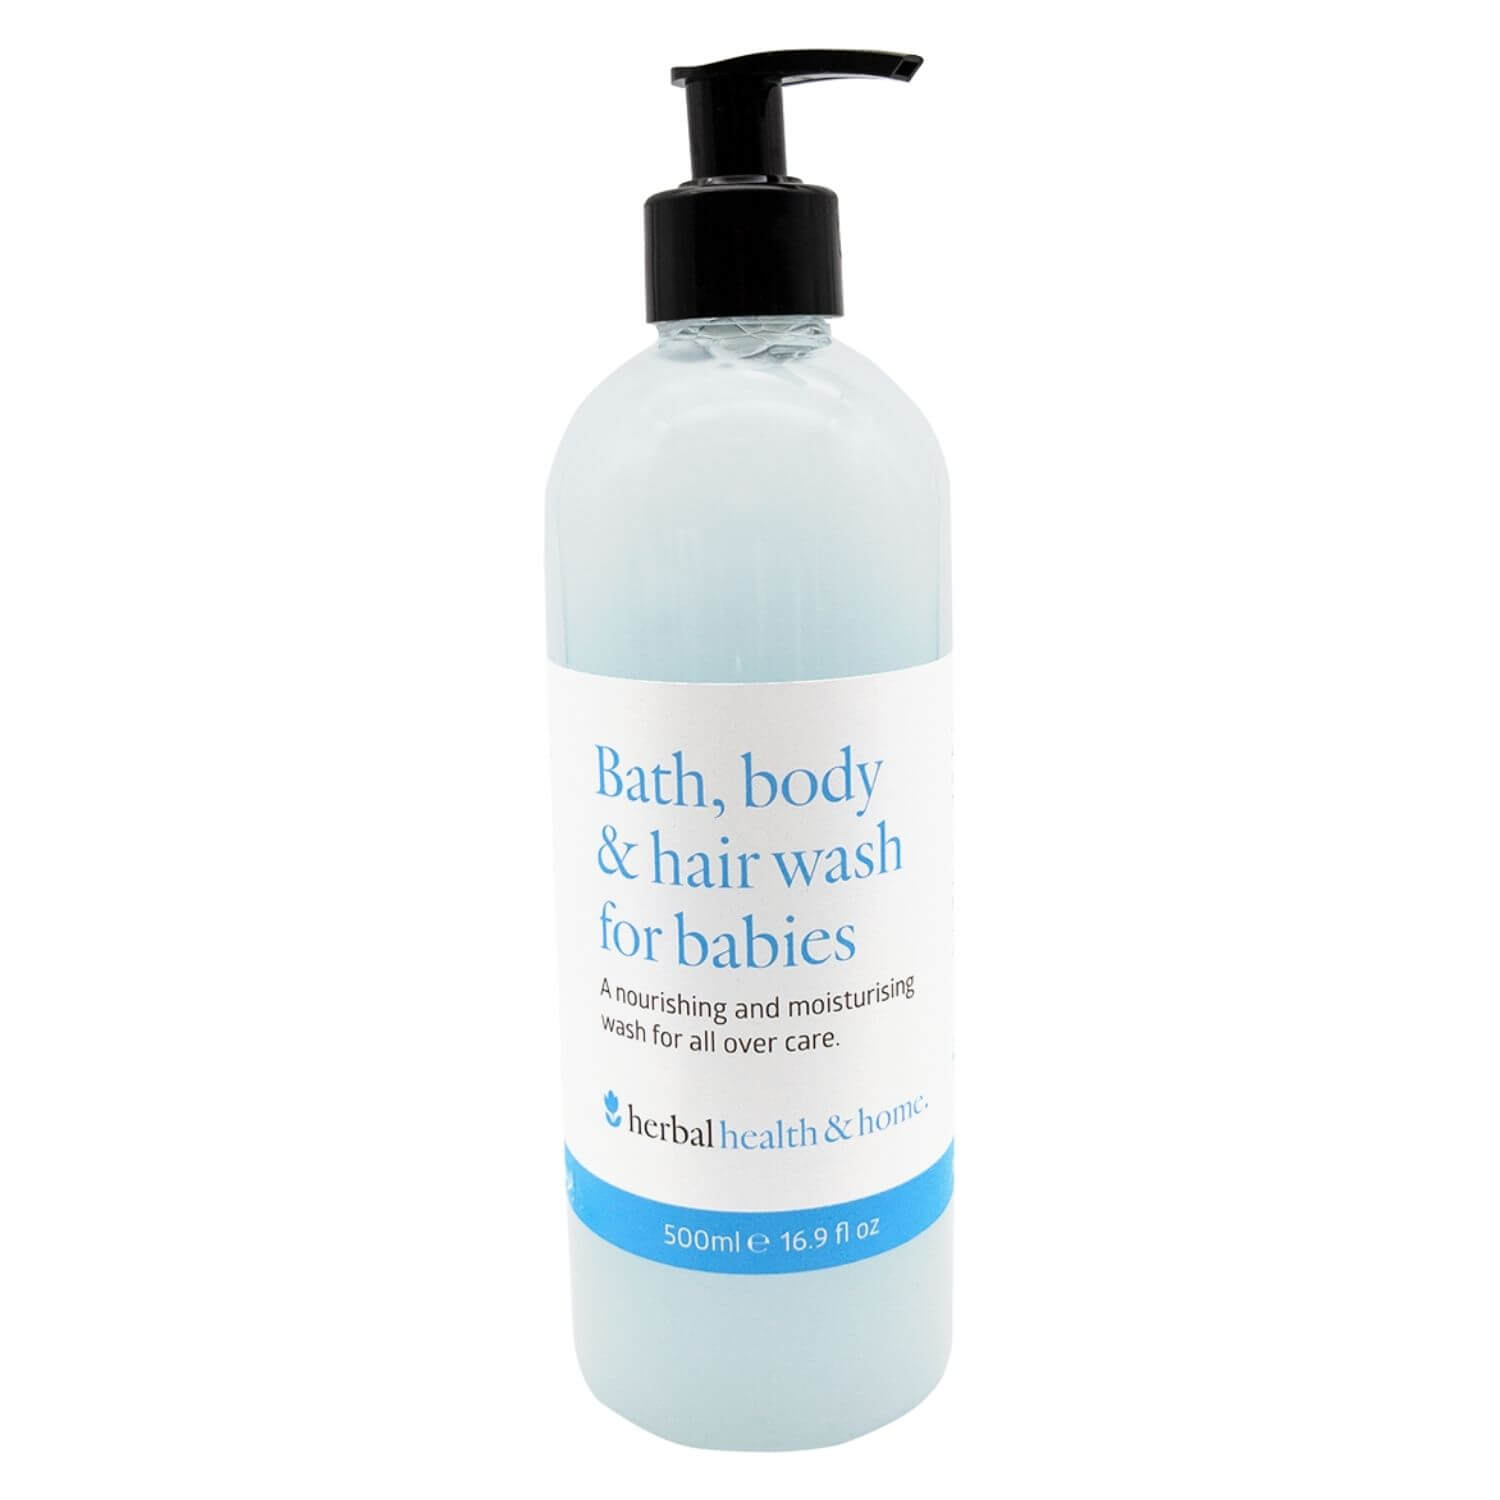 Bath, Body & Hair Wash For Babies | Herbal, Health & Home